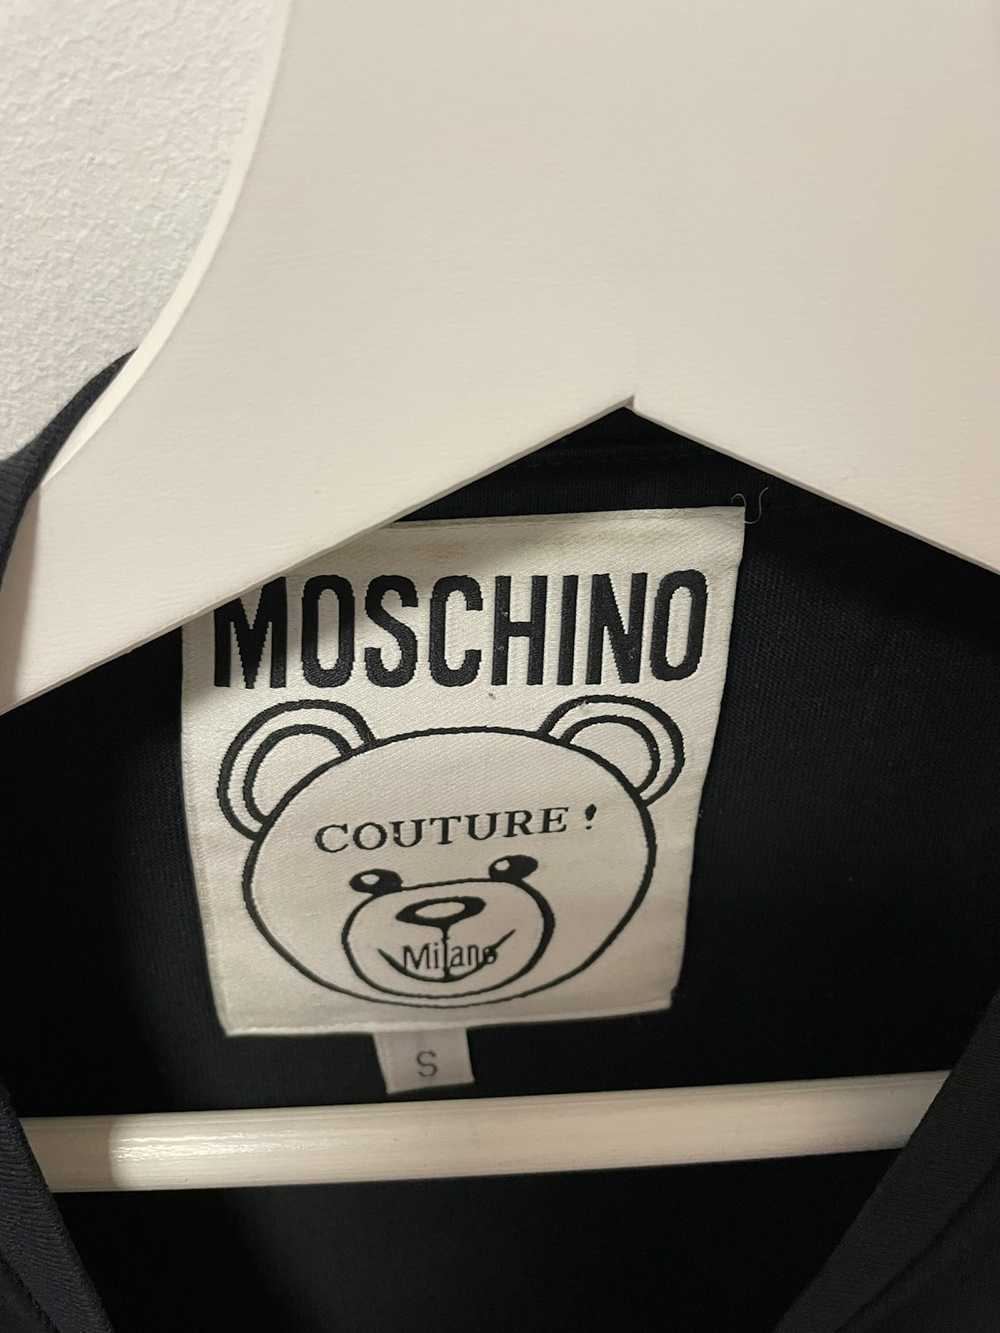 Moschino T-shirt Moschino Couture Milano - image 3